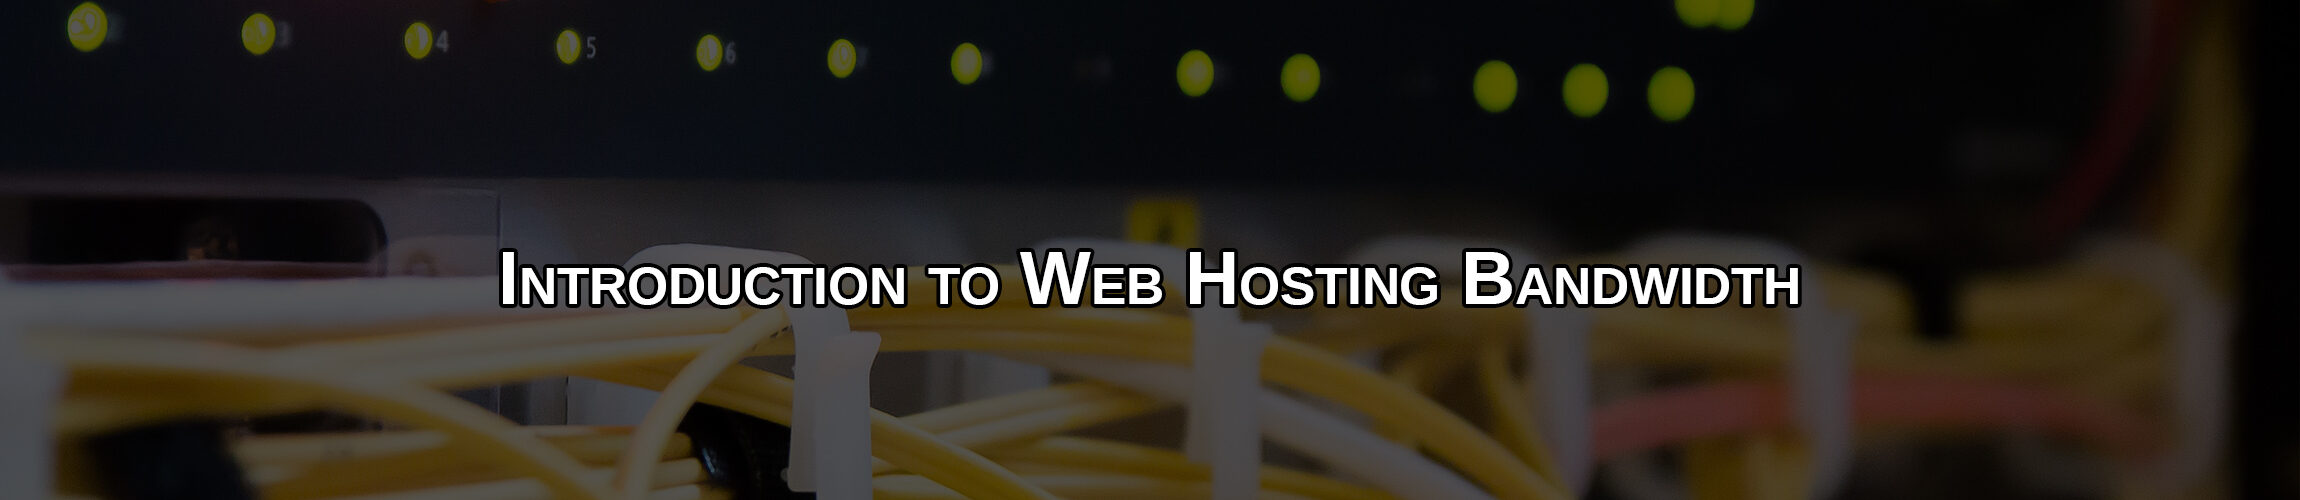 Introduction to Web Hosting Bandwidth